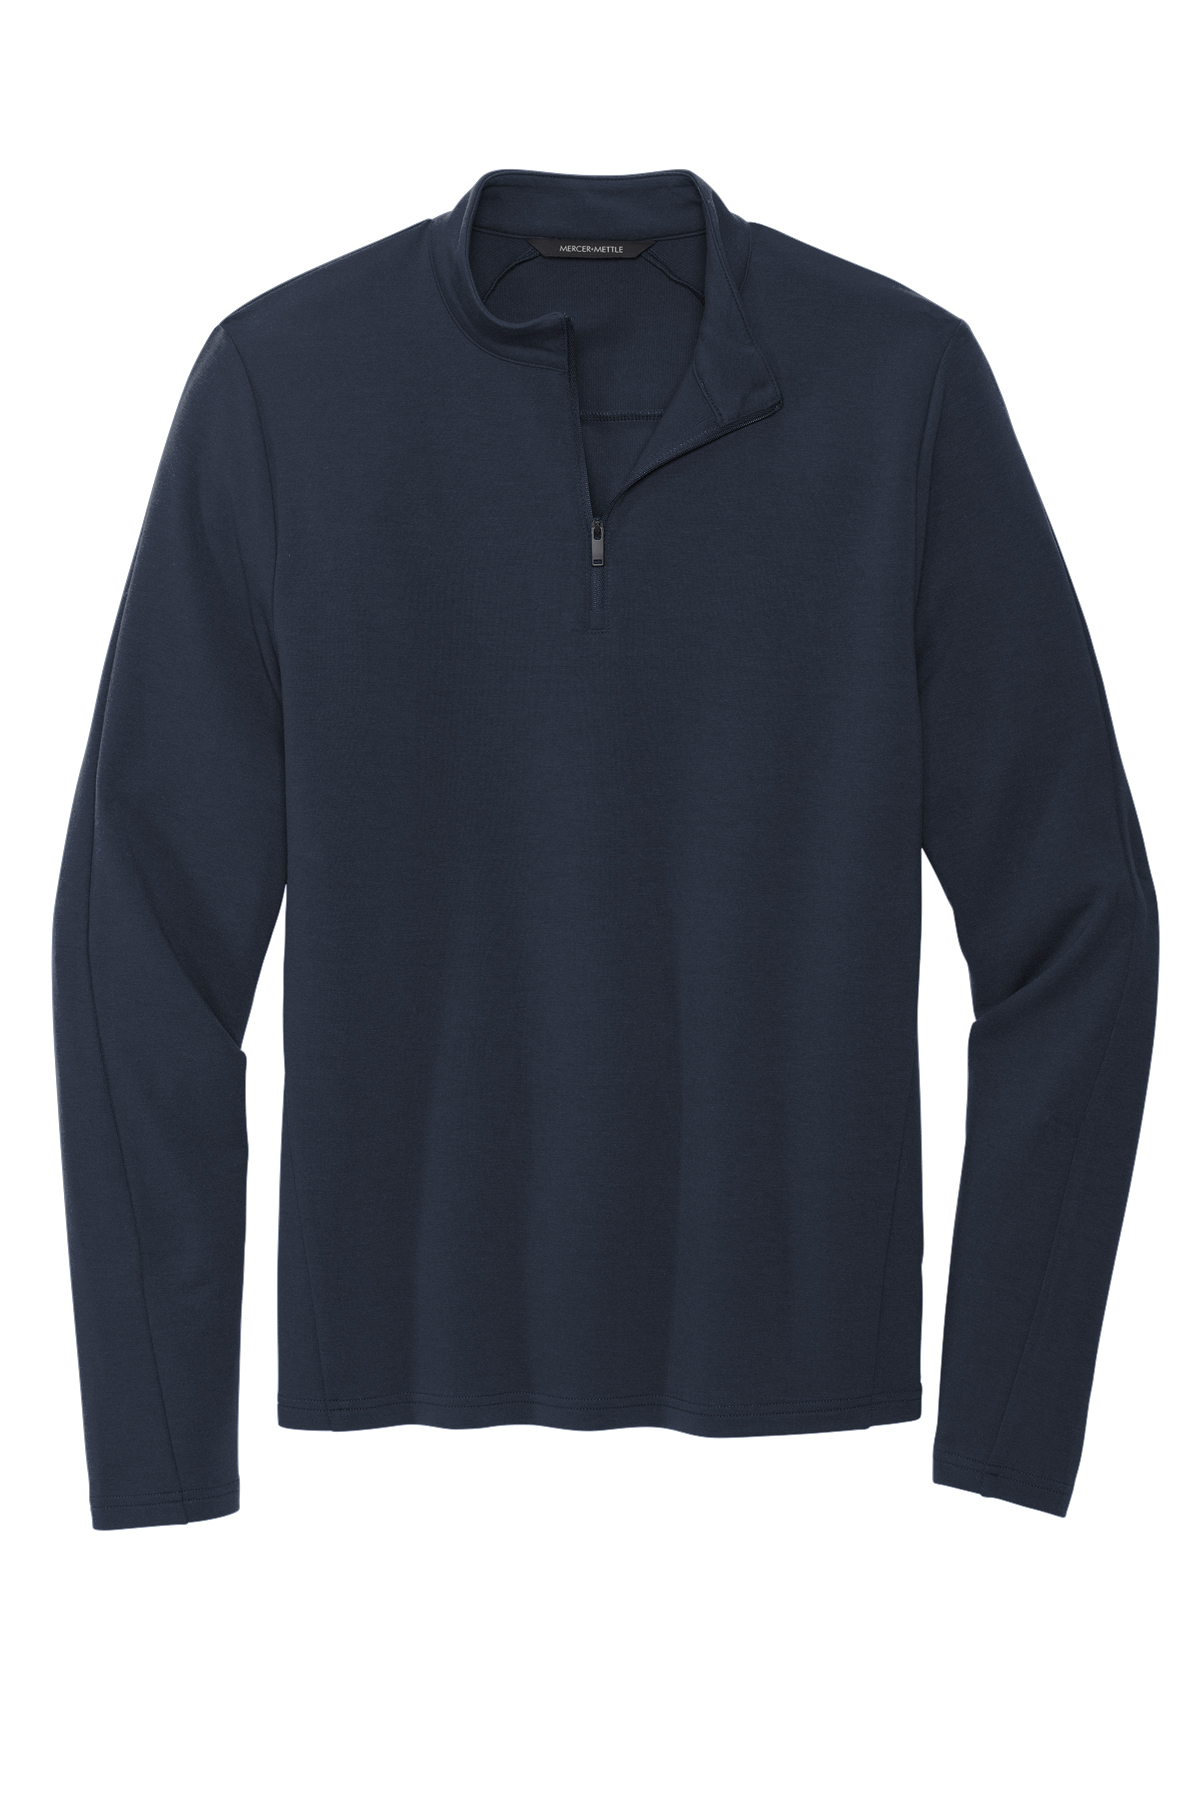 Mercer+Mettle Stretch 1/4-Zip Pullover | Product | SanMar